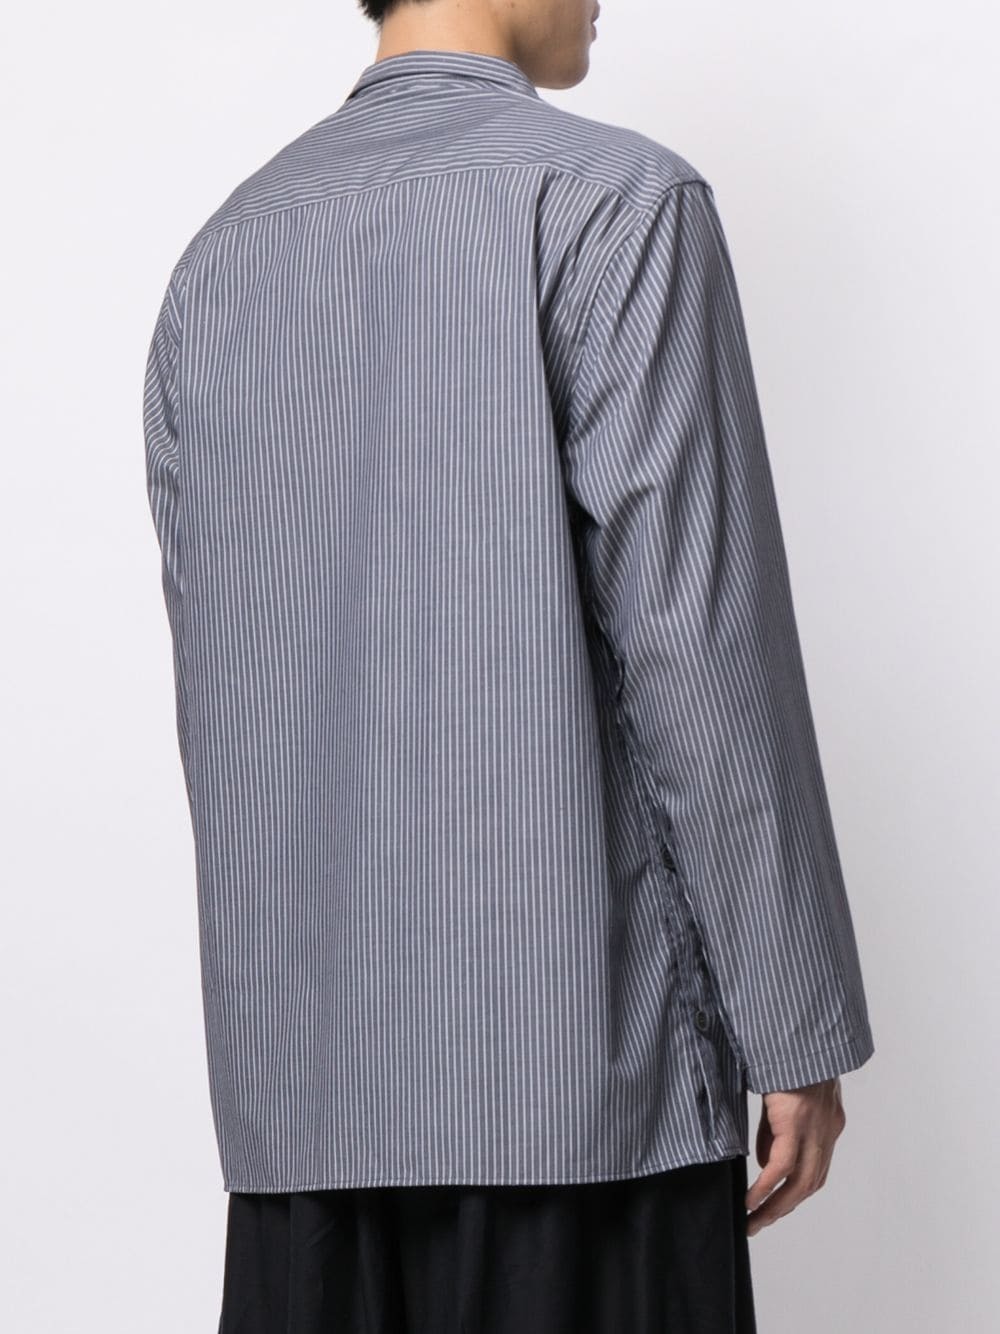 Yohji Yamamoto Striped Long Sleeve Shirt, $414 | farfetch.com | Lookastic